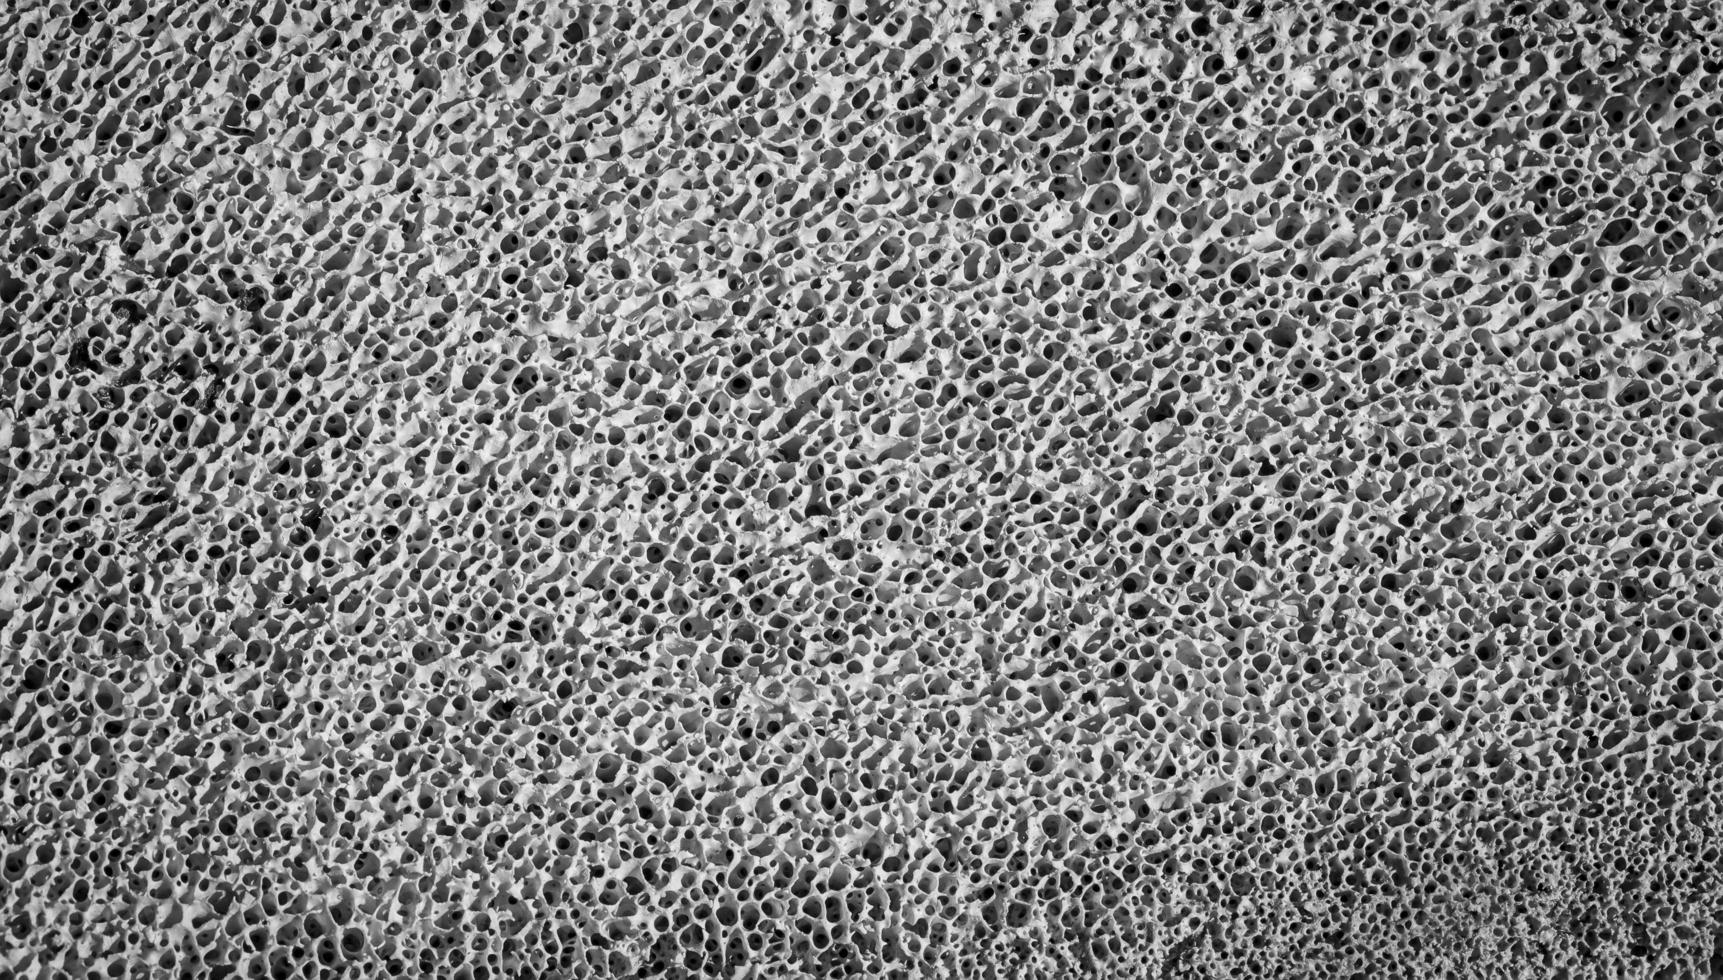 Bone spongy structure close-up, healthy texture of bone. Selective focus photo